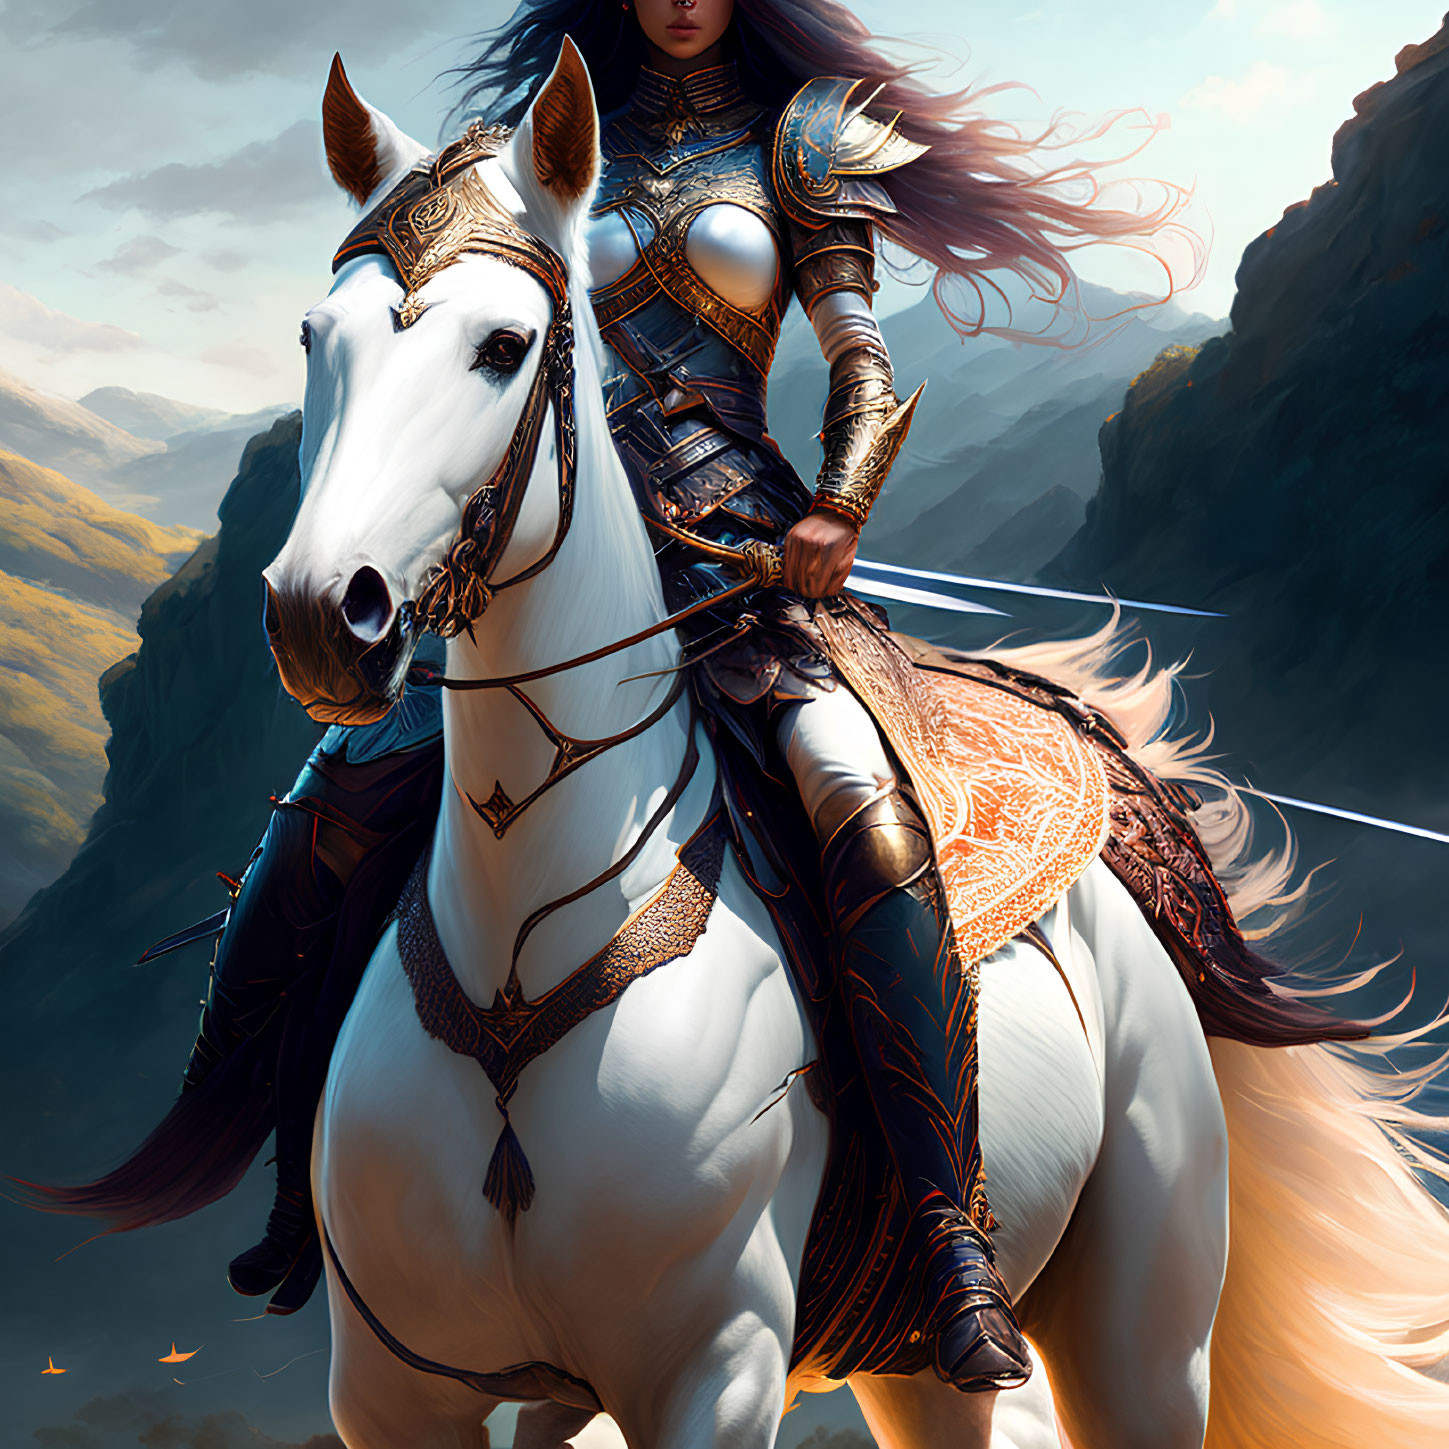 Armored warrior woman riding white horse in mountainous backdrop